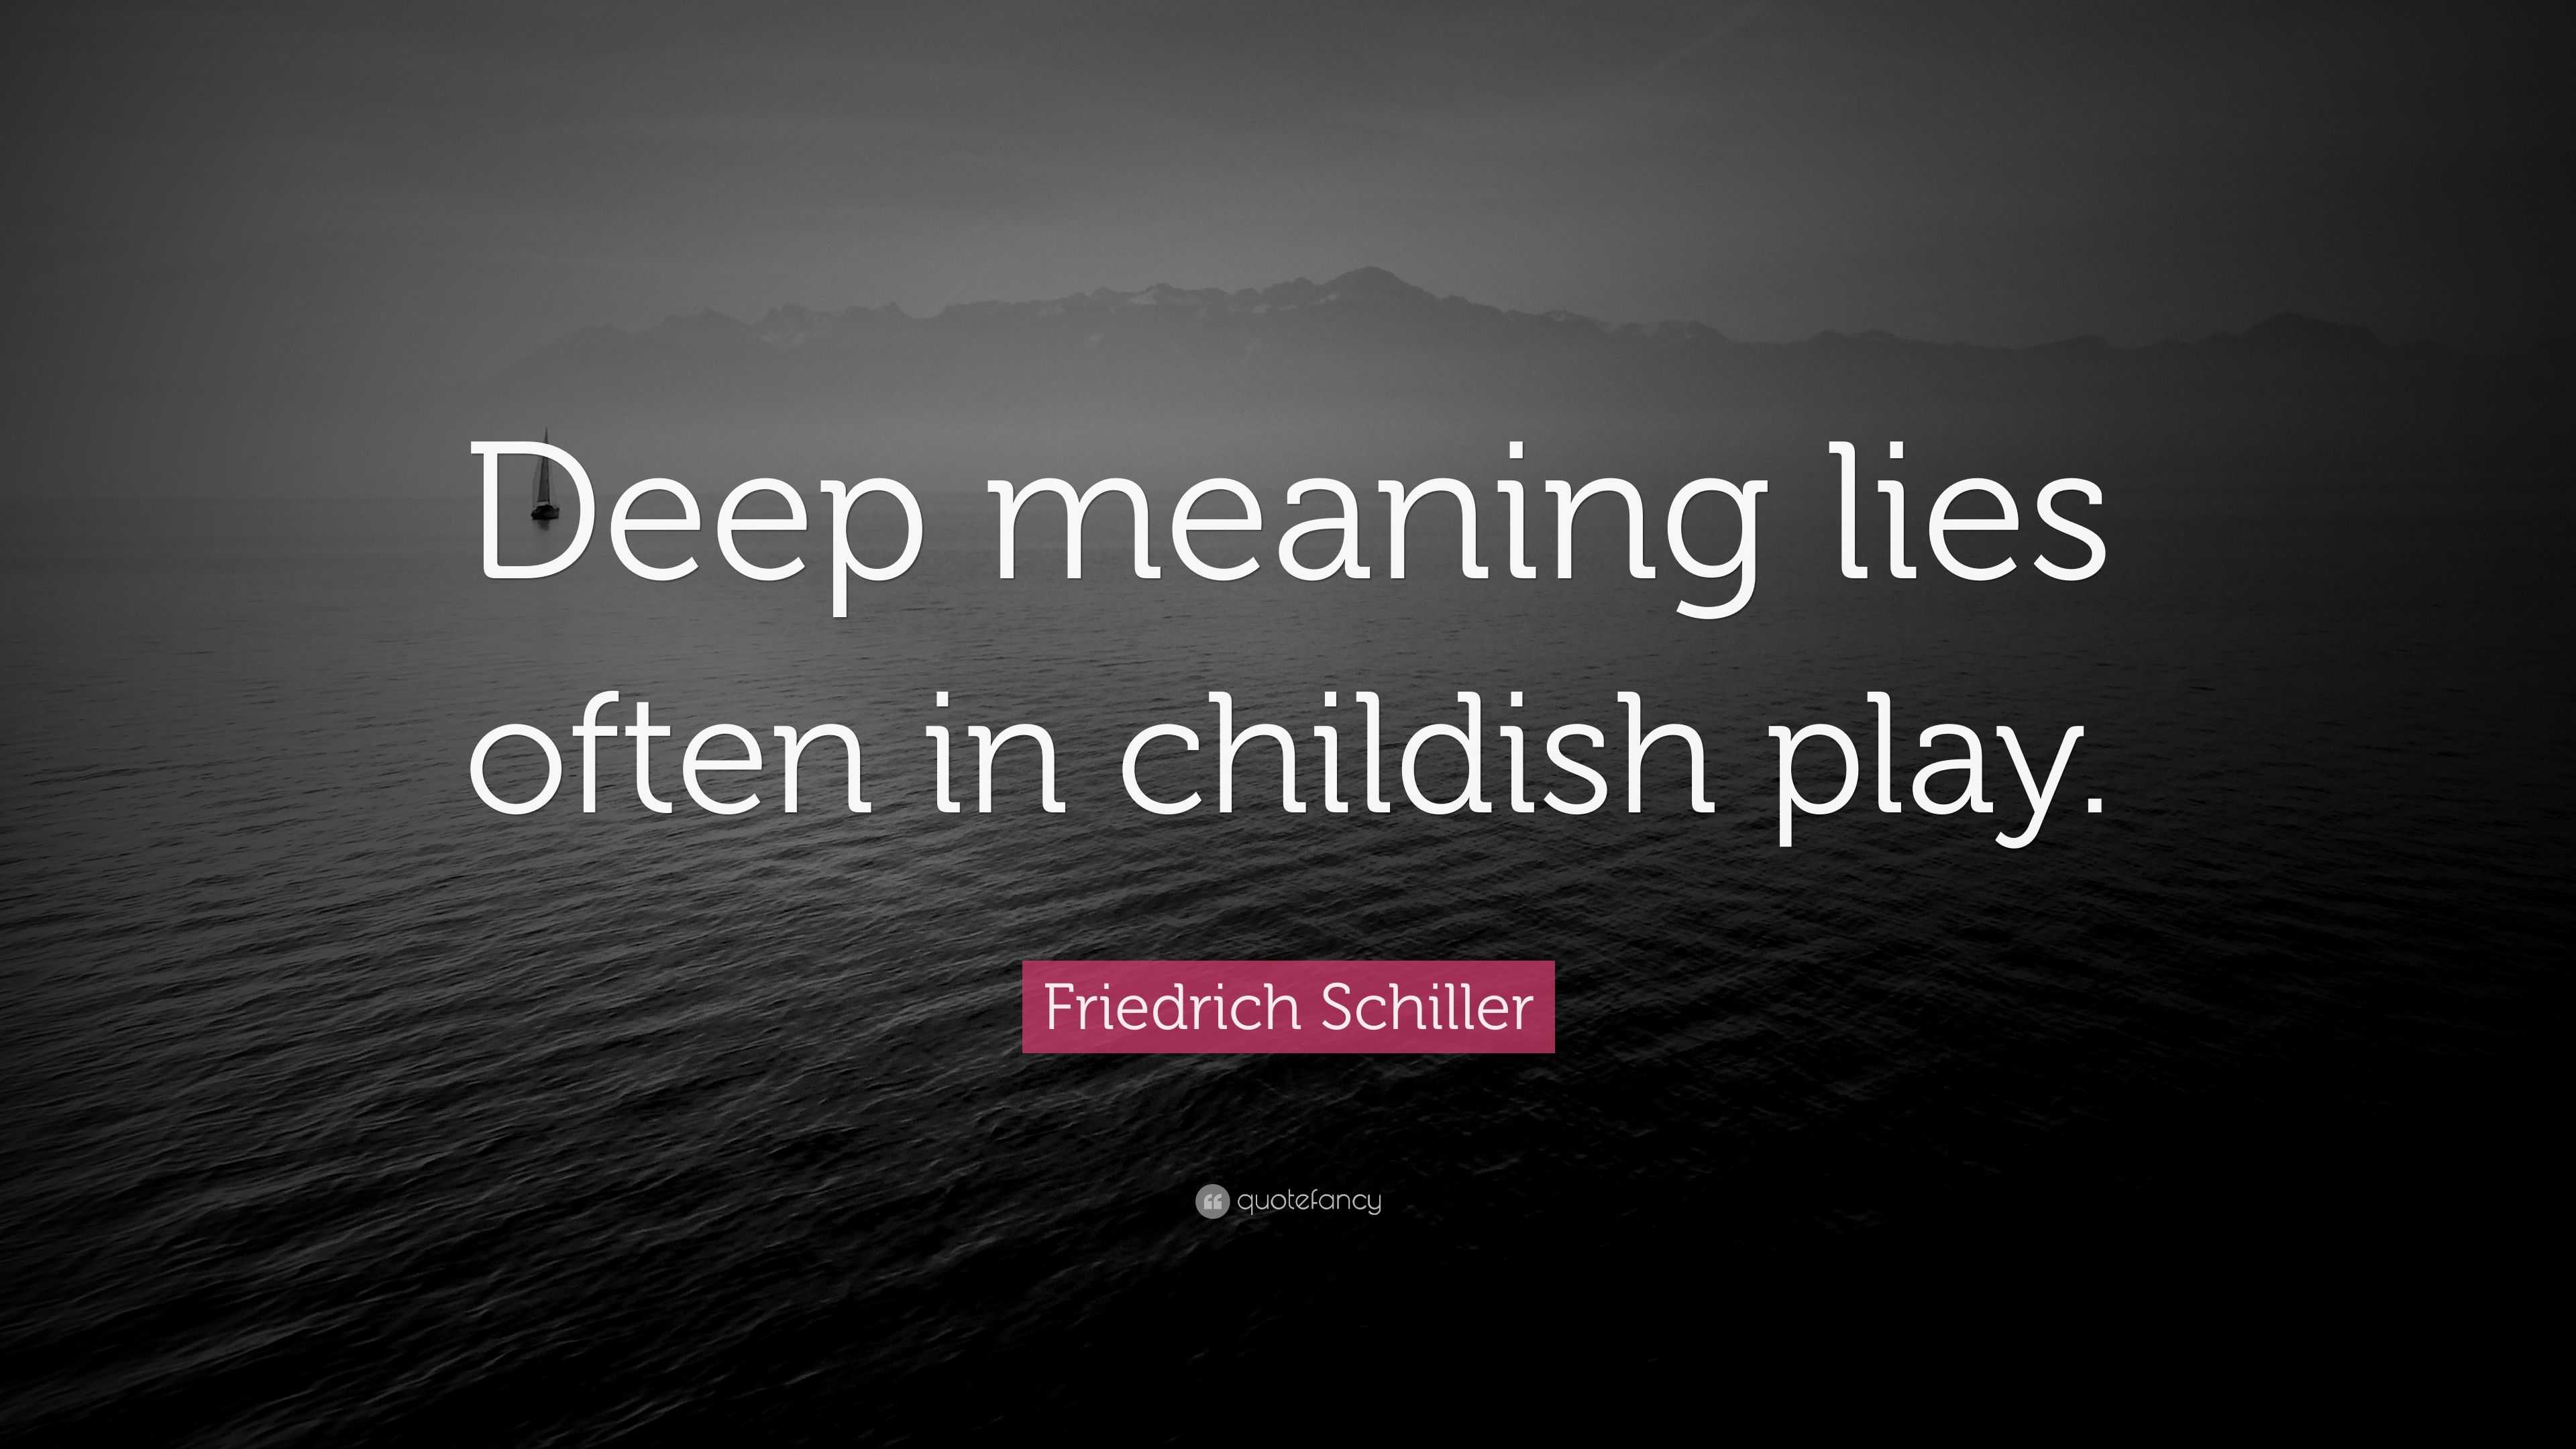 Friedrich Schiller Quote: "Deep meaning lies often in ...